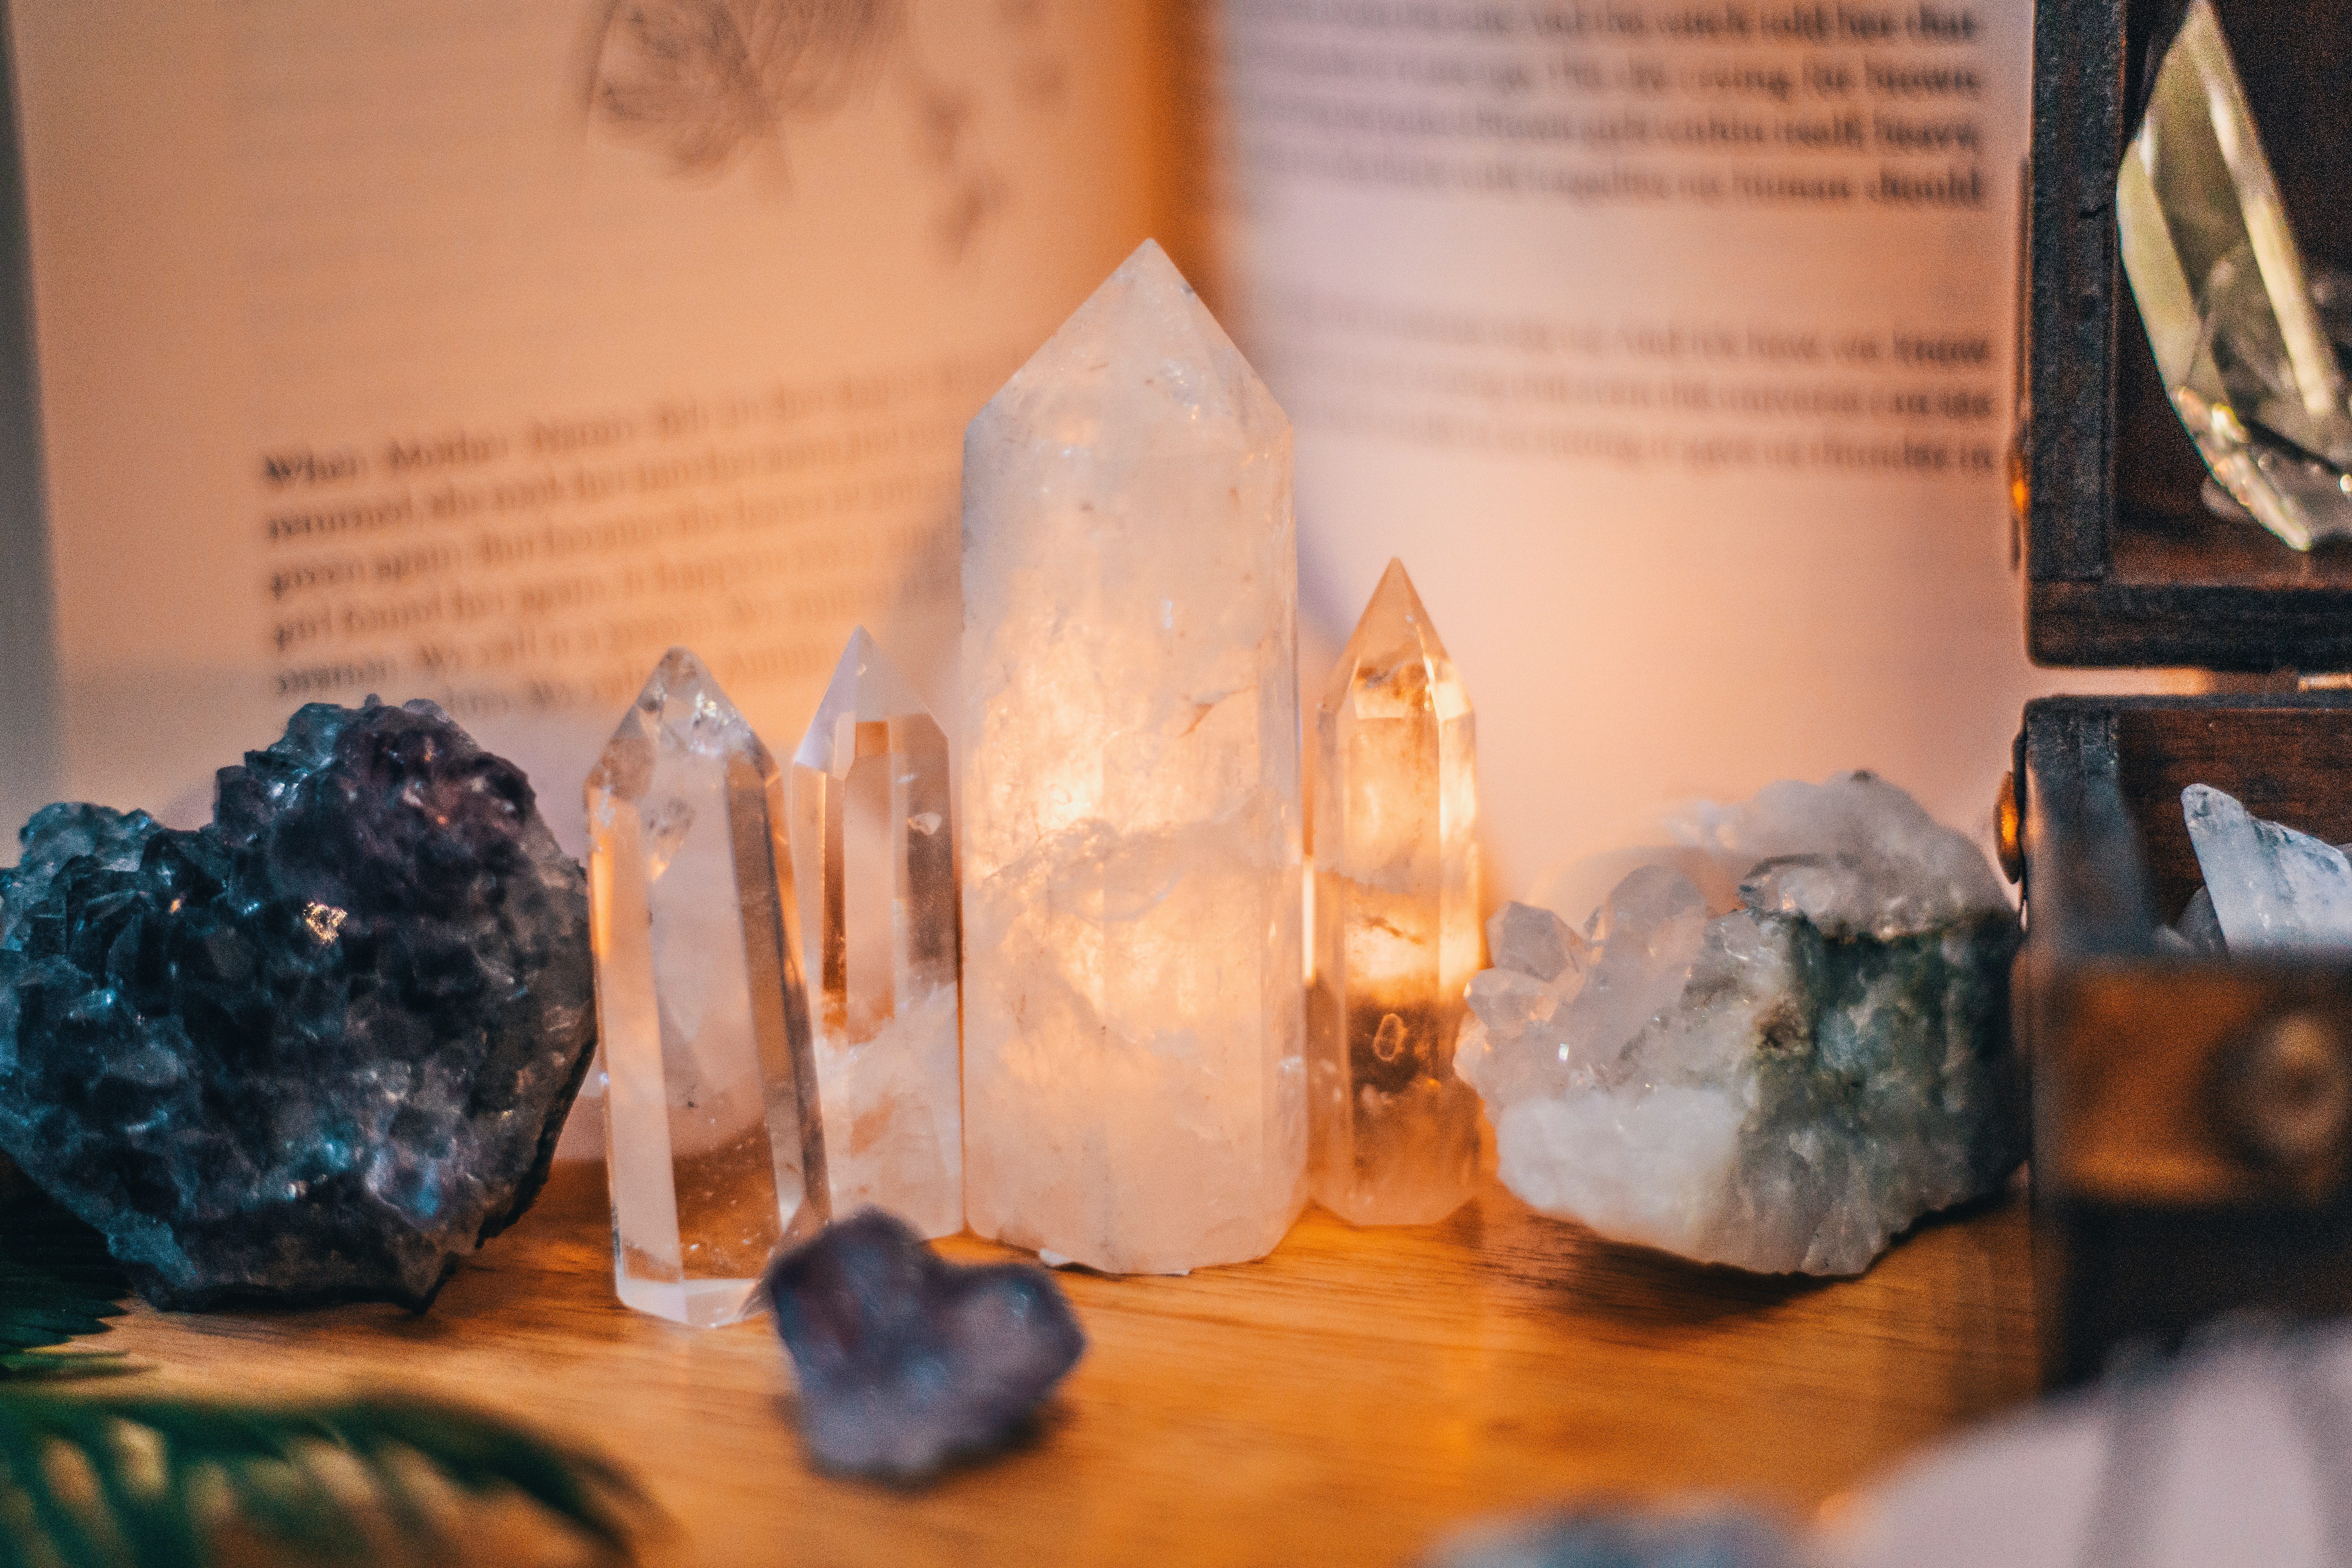 Crystal Healing Set of 12 Stones promoting spiritual wellness Gift FREE P+P 